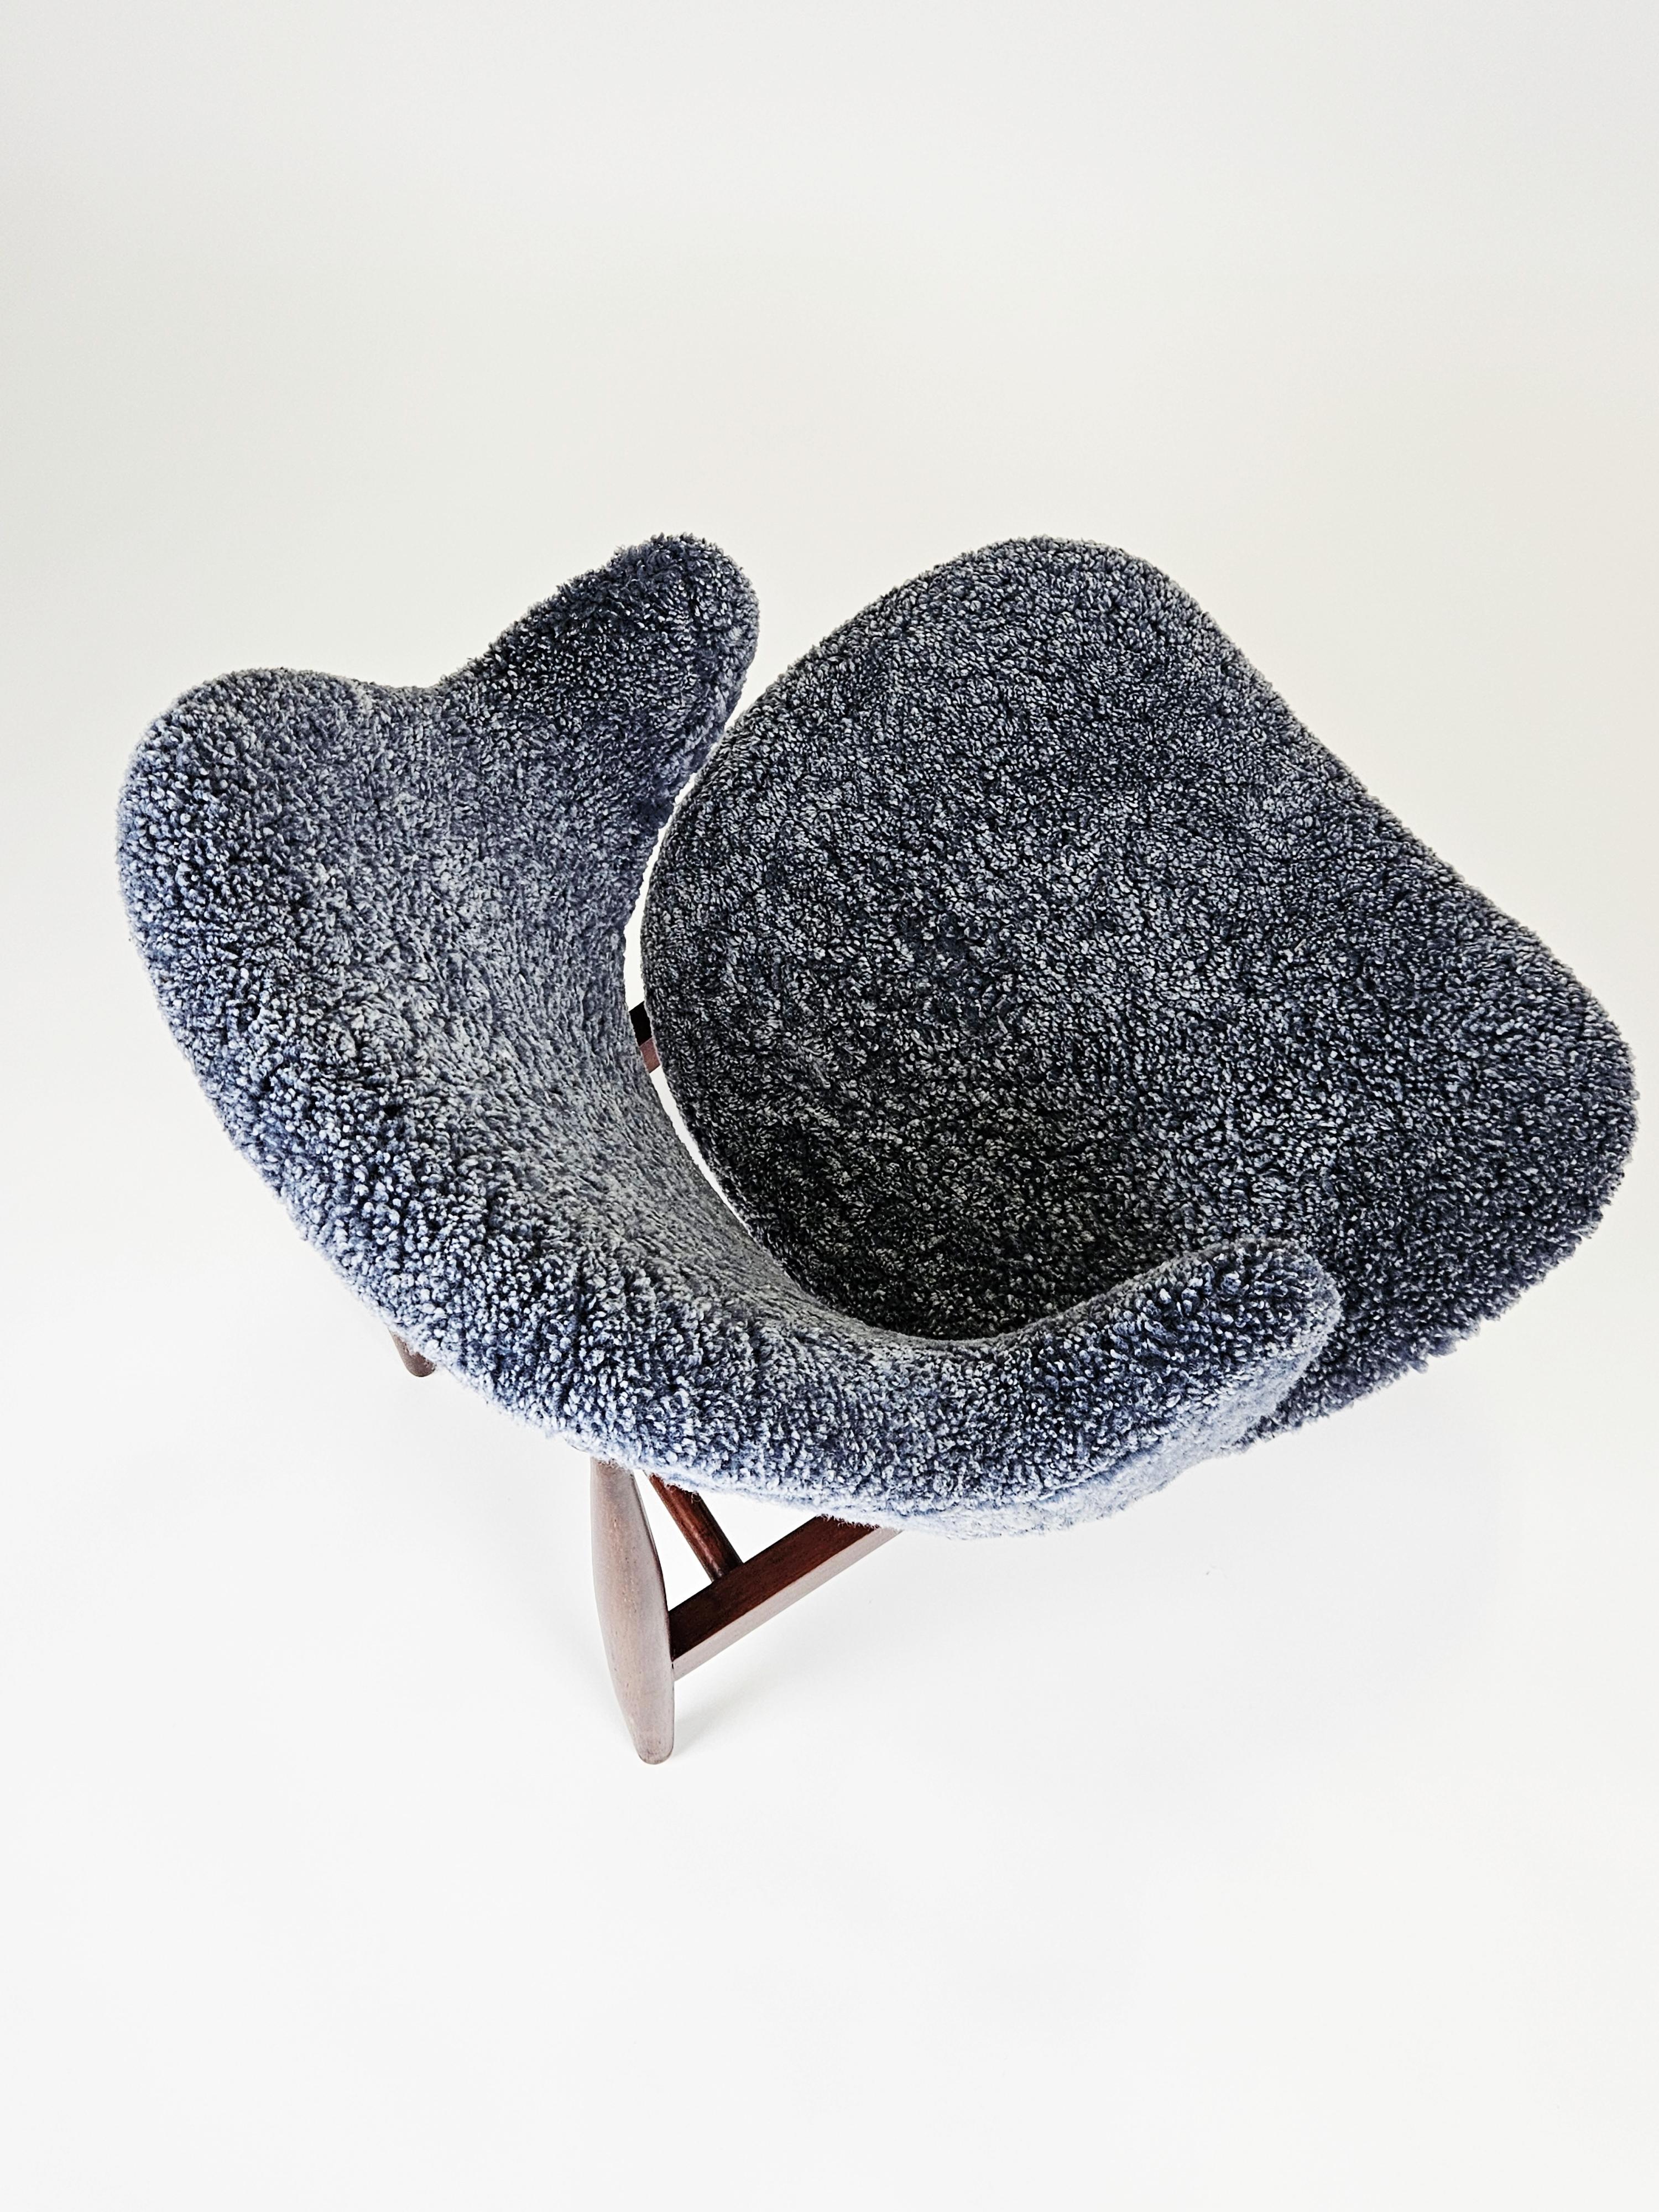 Rare Scandinavian Modern shell chair by IB Kofod Larsen, Denmark, 1950s For Sale 2